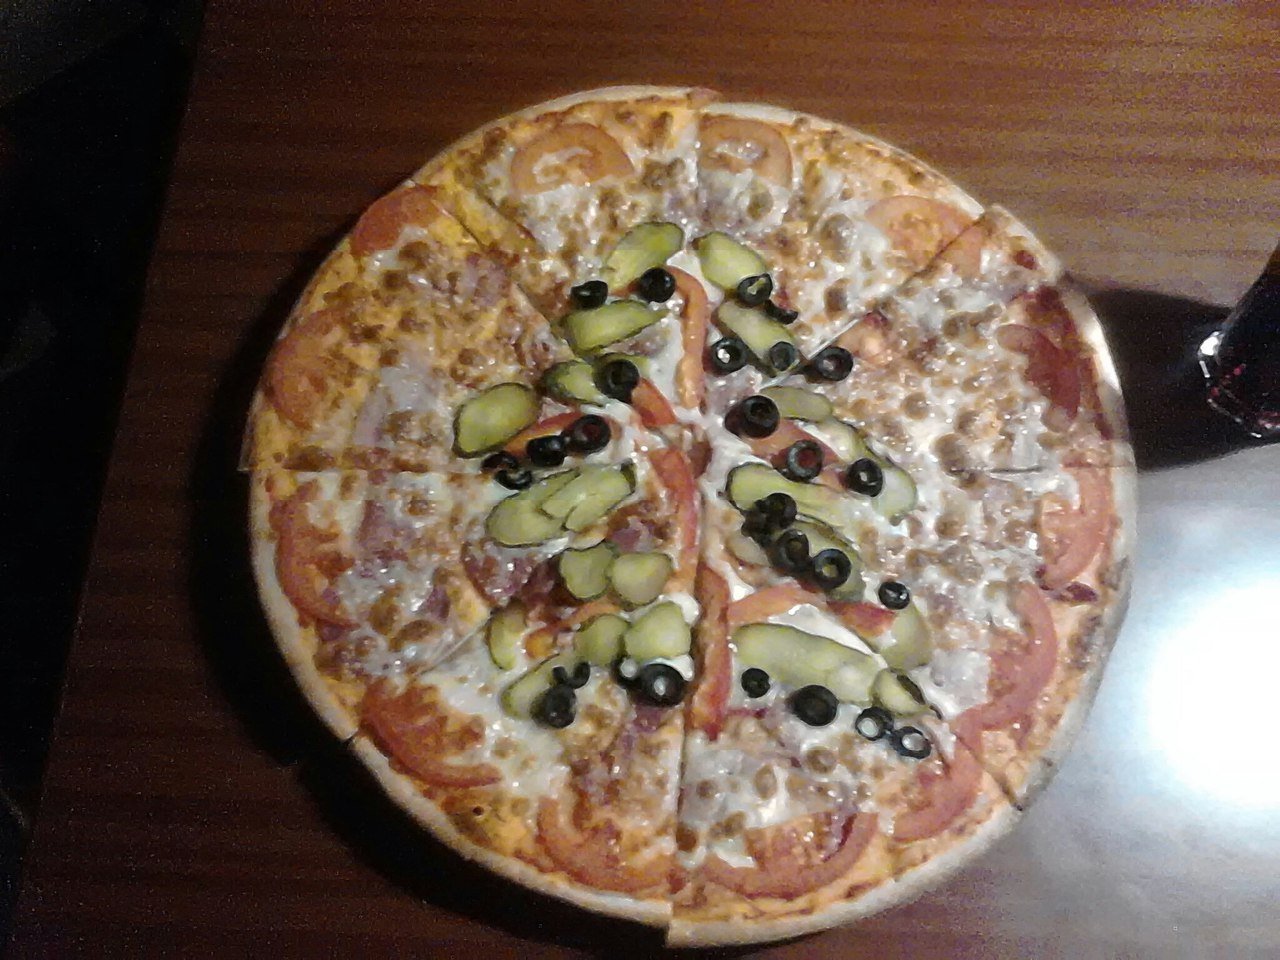 mama-pizza